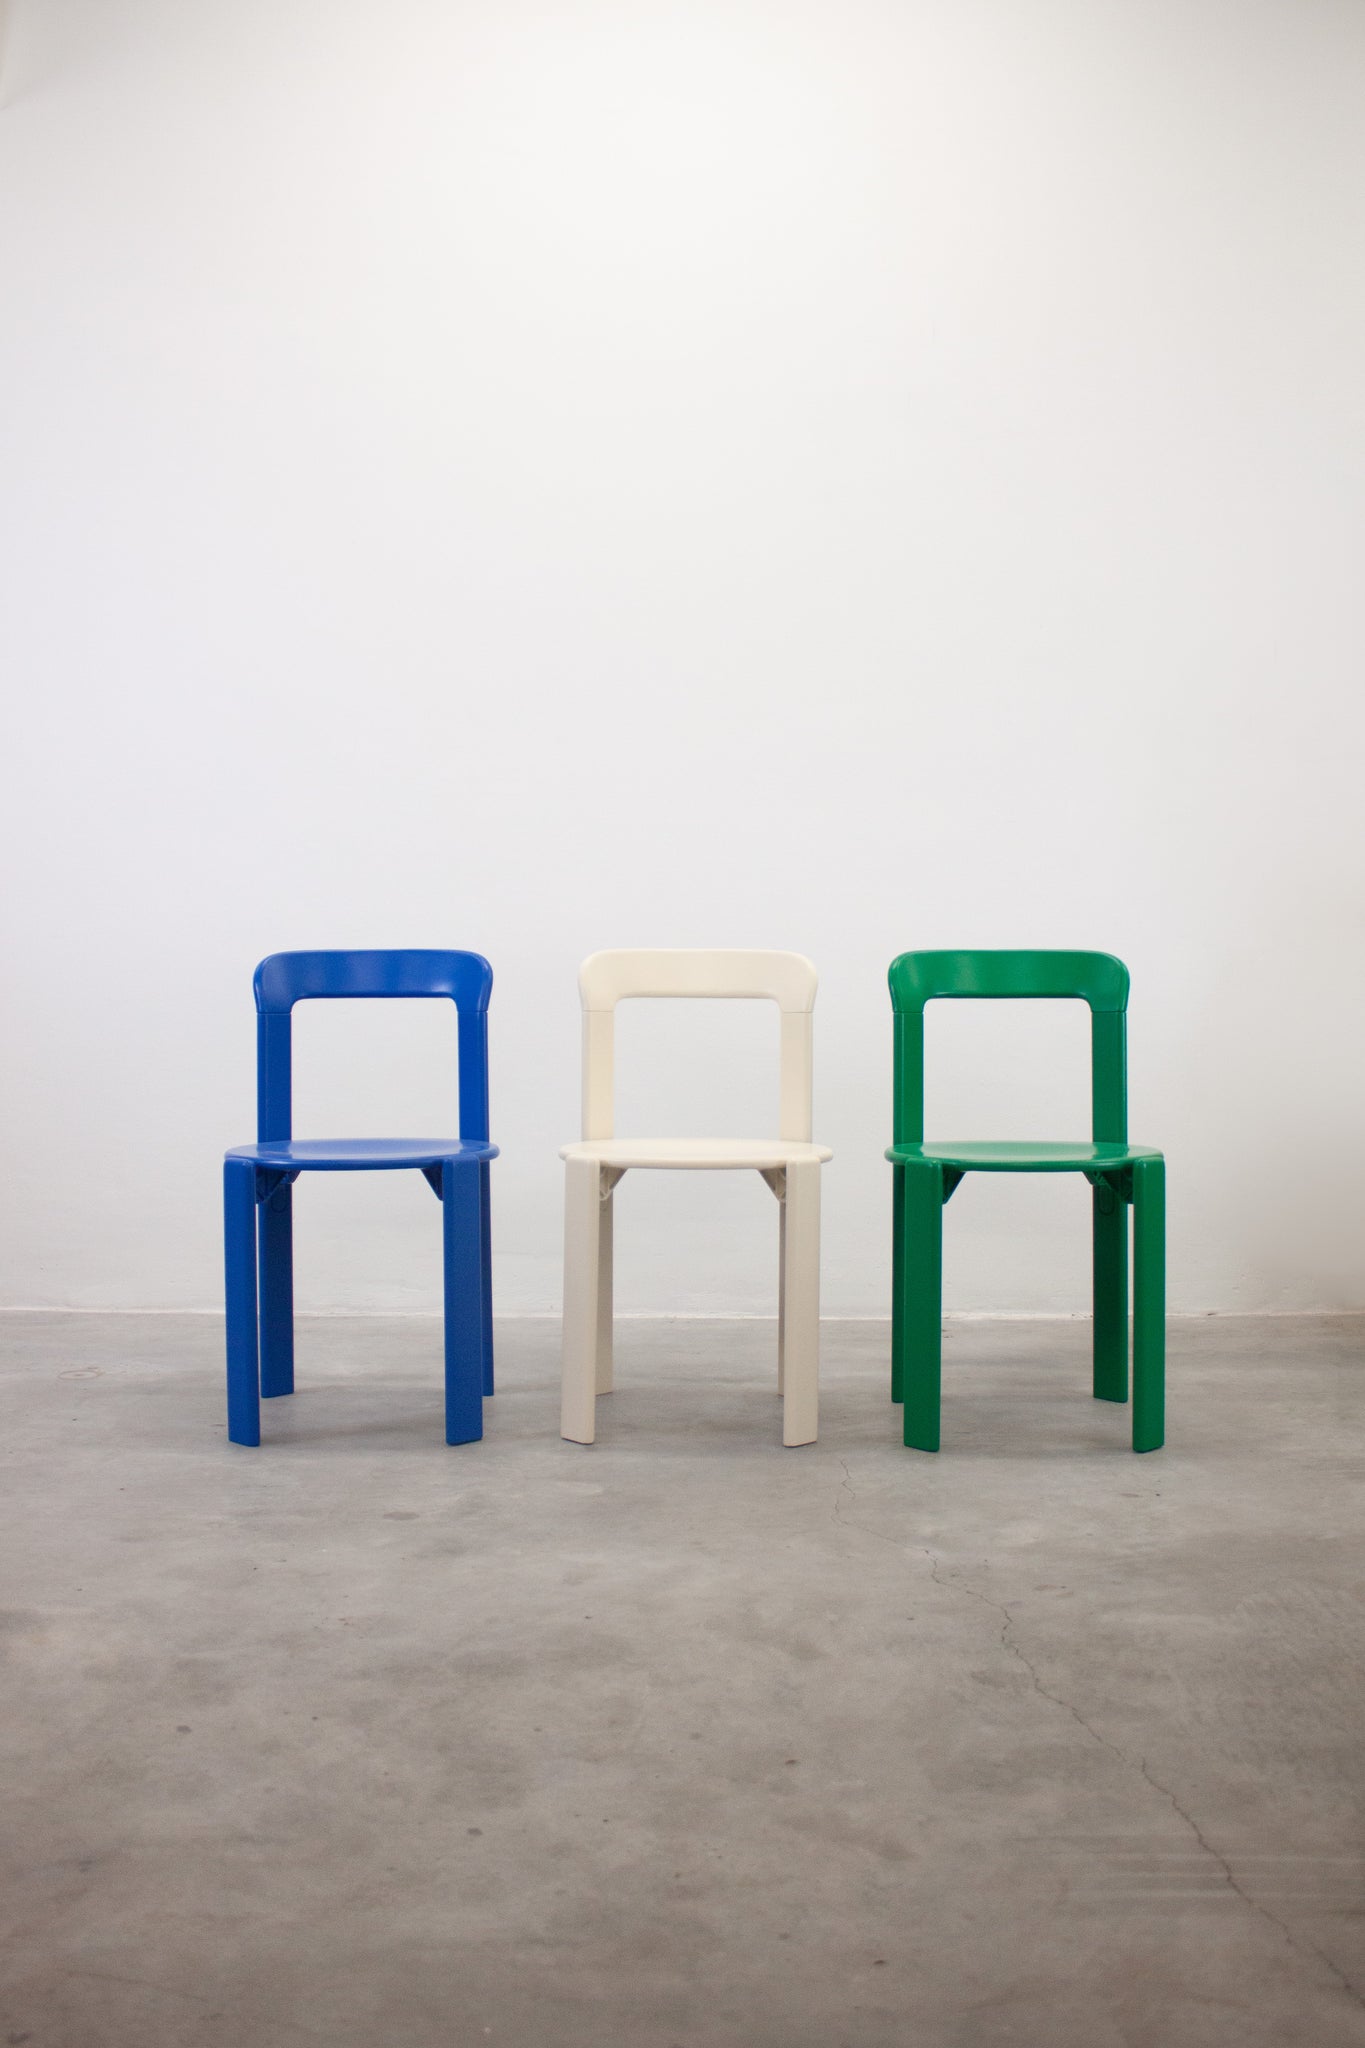 Dietiker Rey Dining Chairs by Bruno Rey (Ivory White)